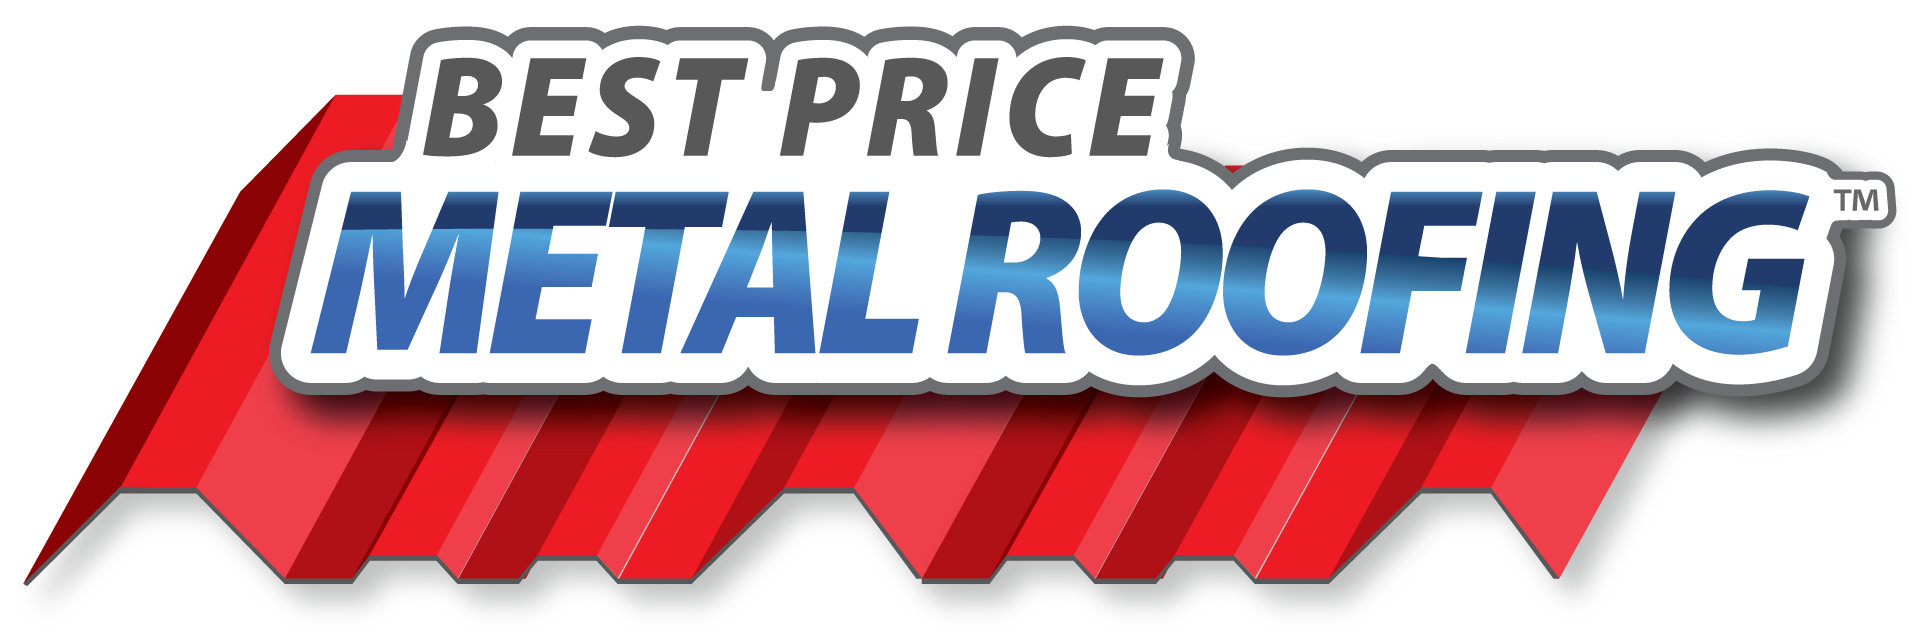 Best Price Metal Roofing logo